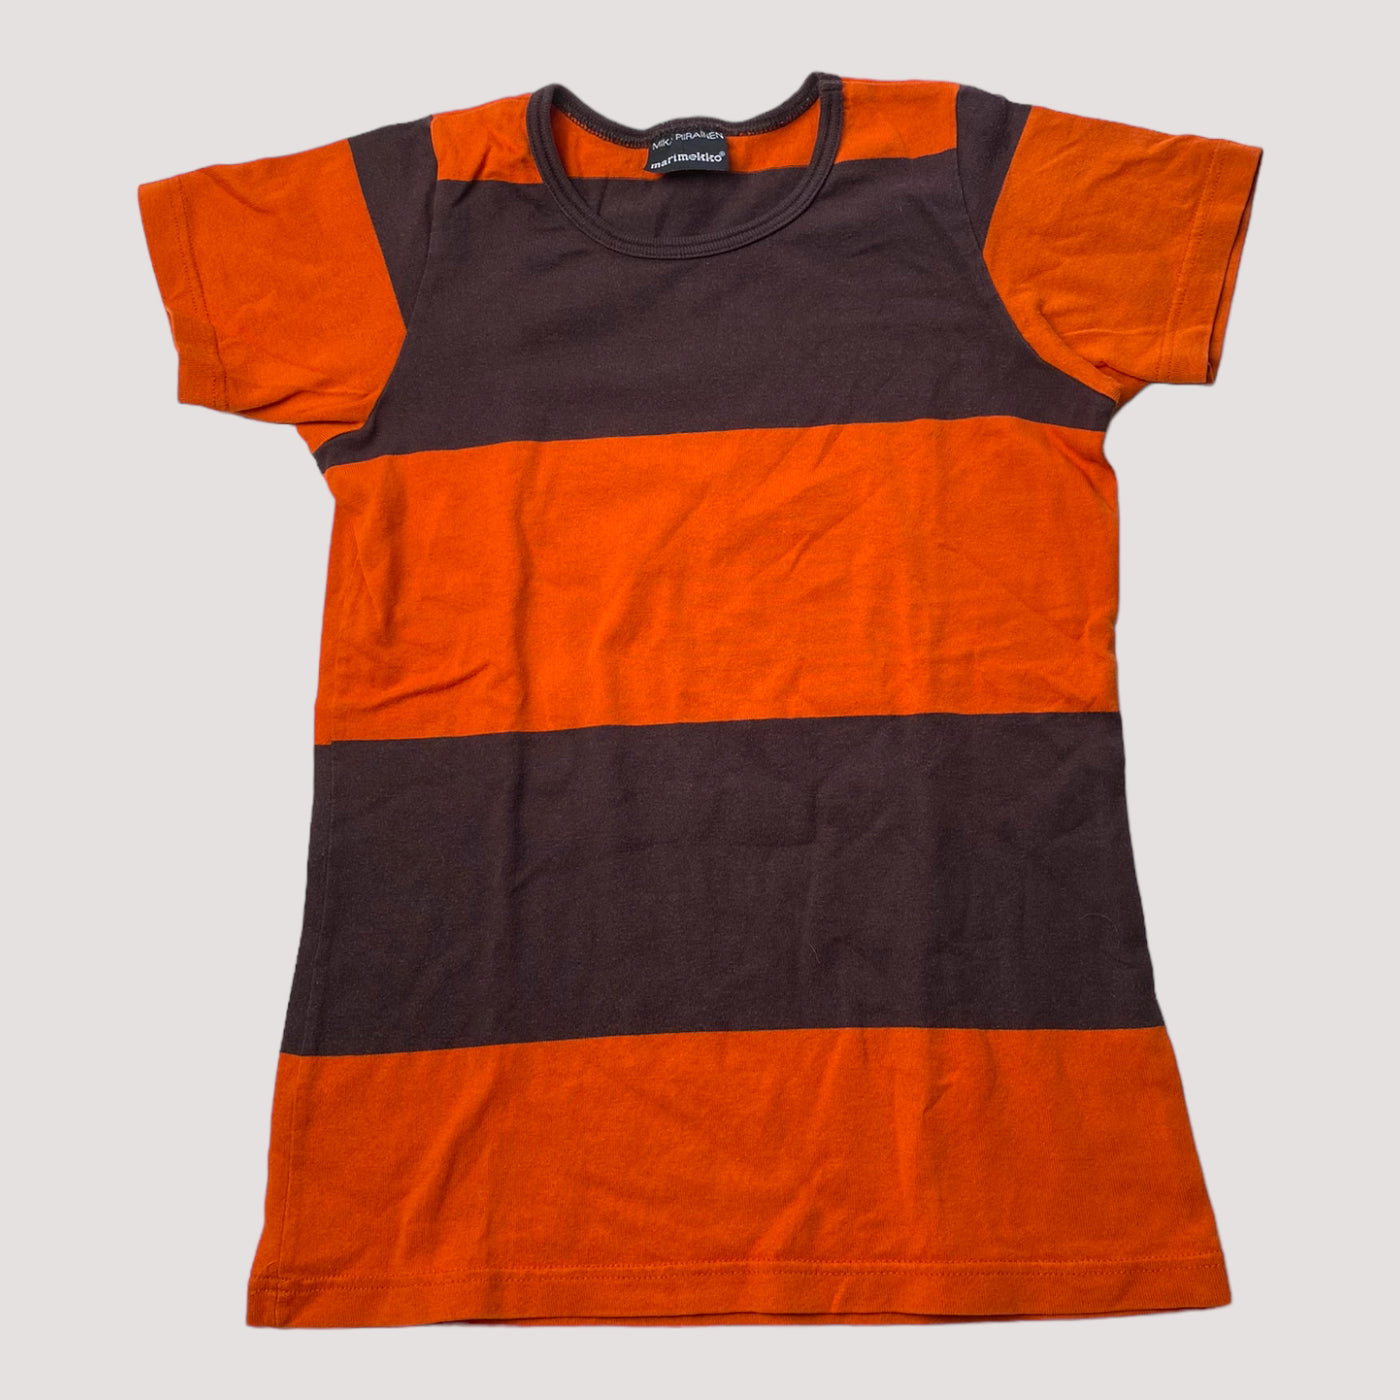 Marimekko t-shirt, chocolate / orange | 150cm